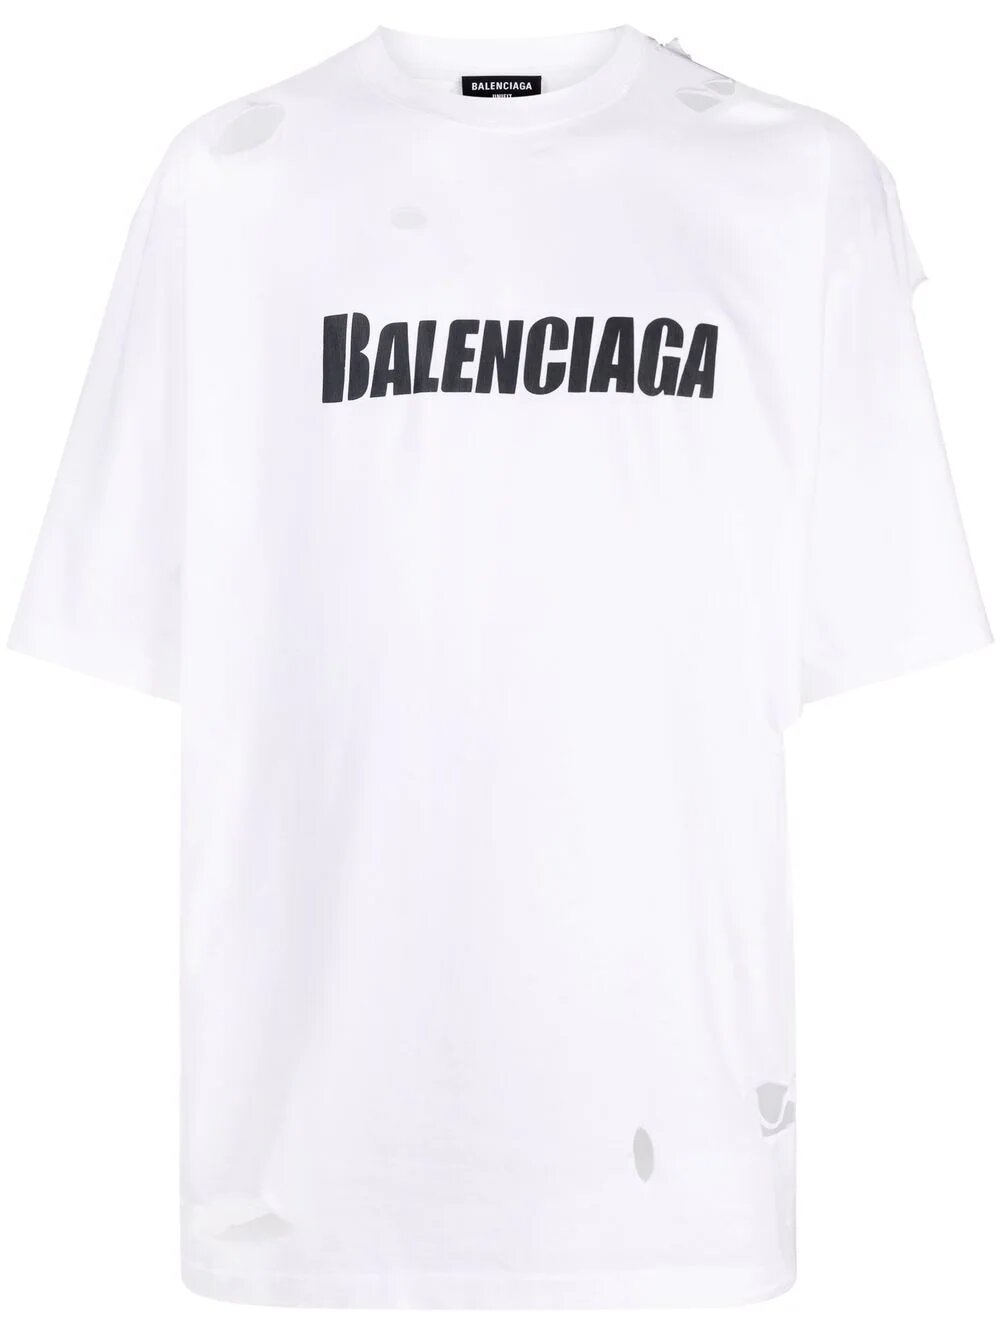 Balenciaga, Shirts, Mens Distressed Balenciaga Shirt Xxl Whiteorange